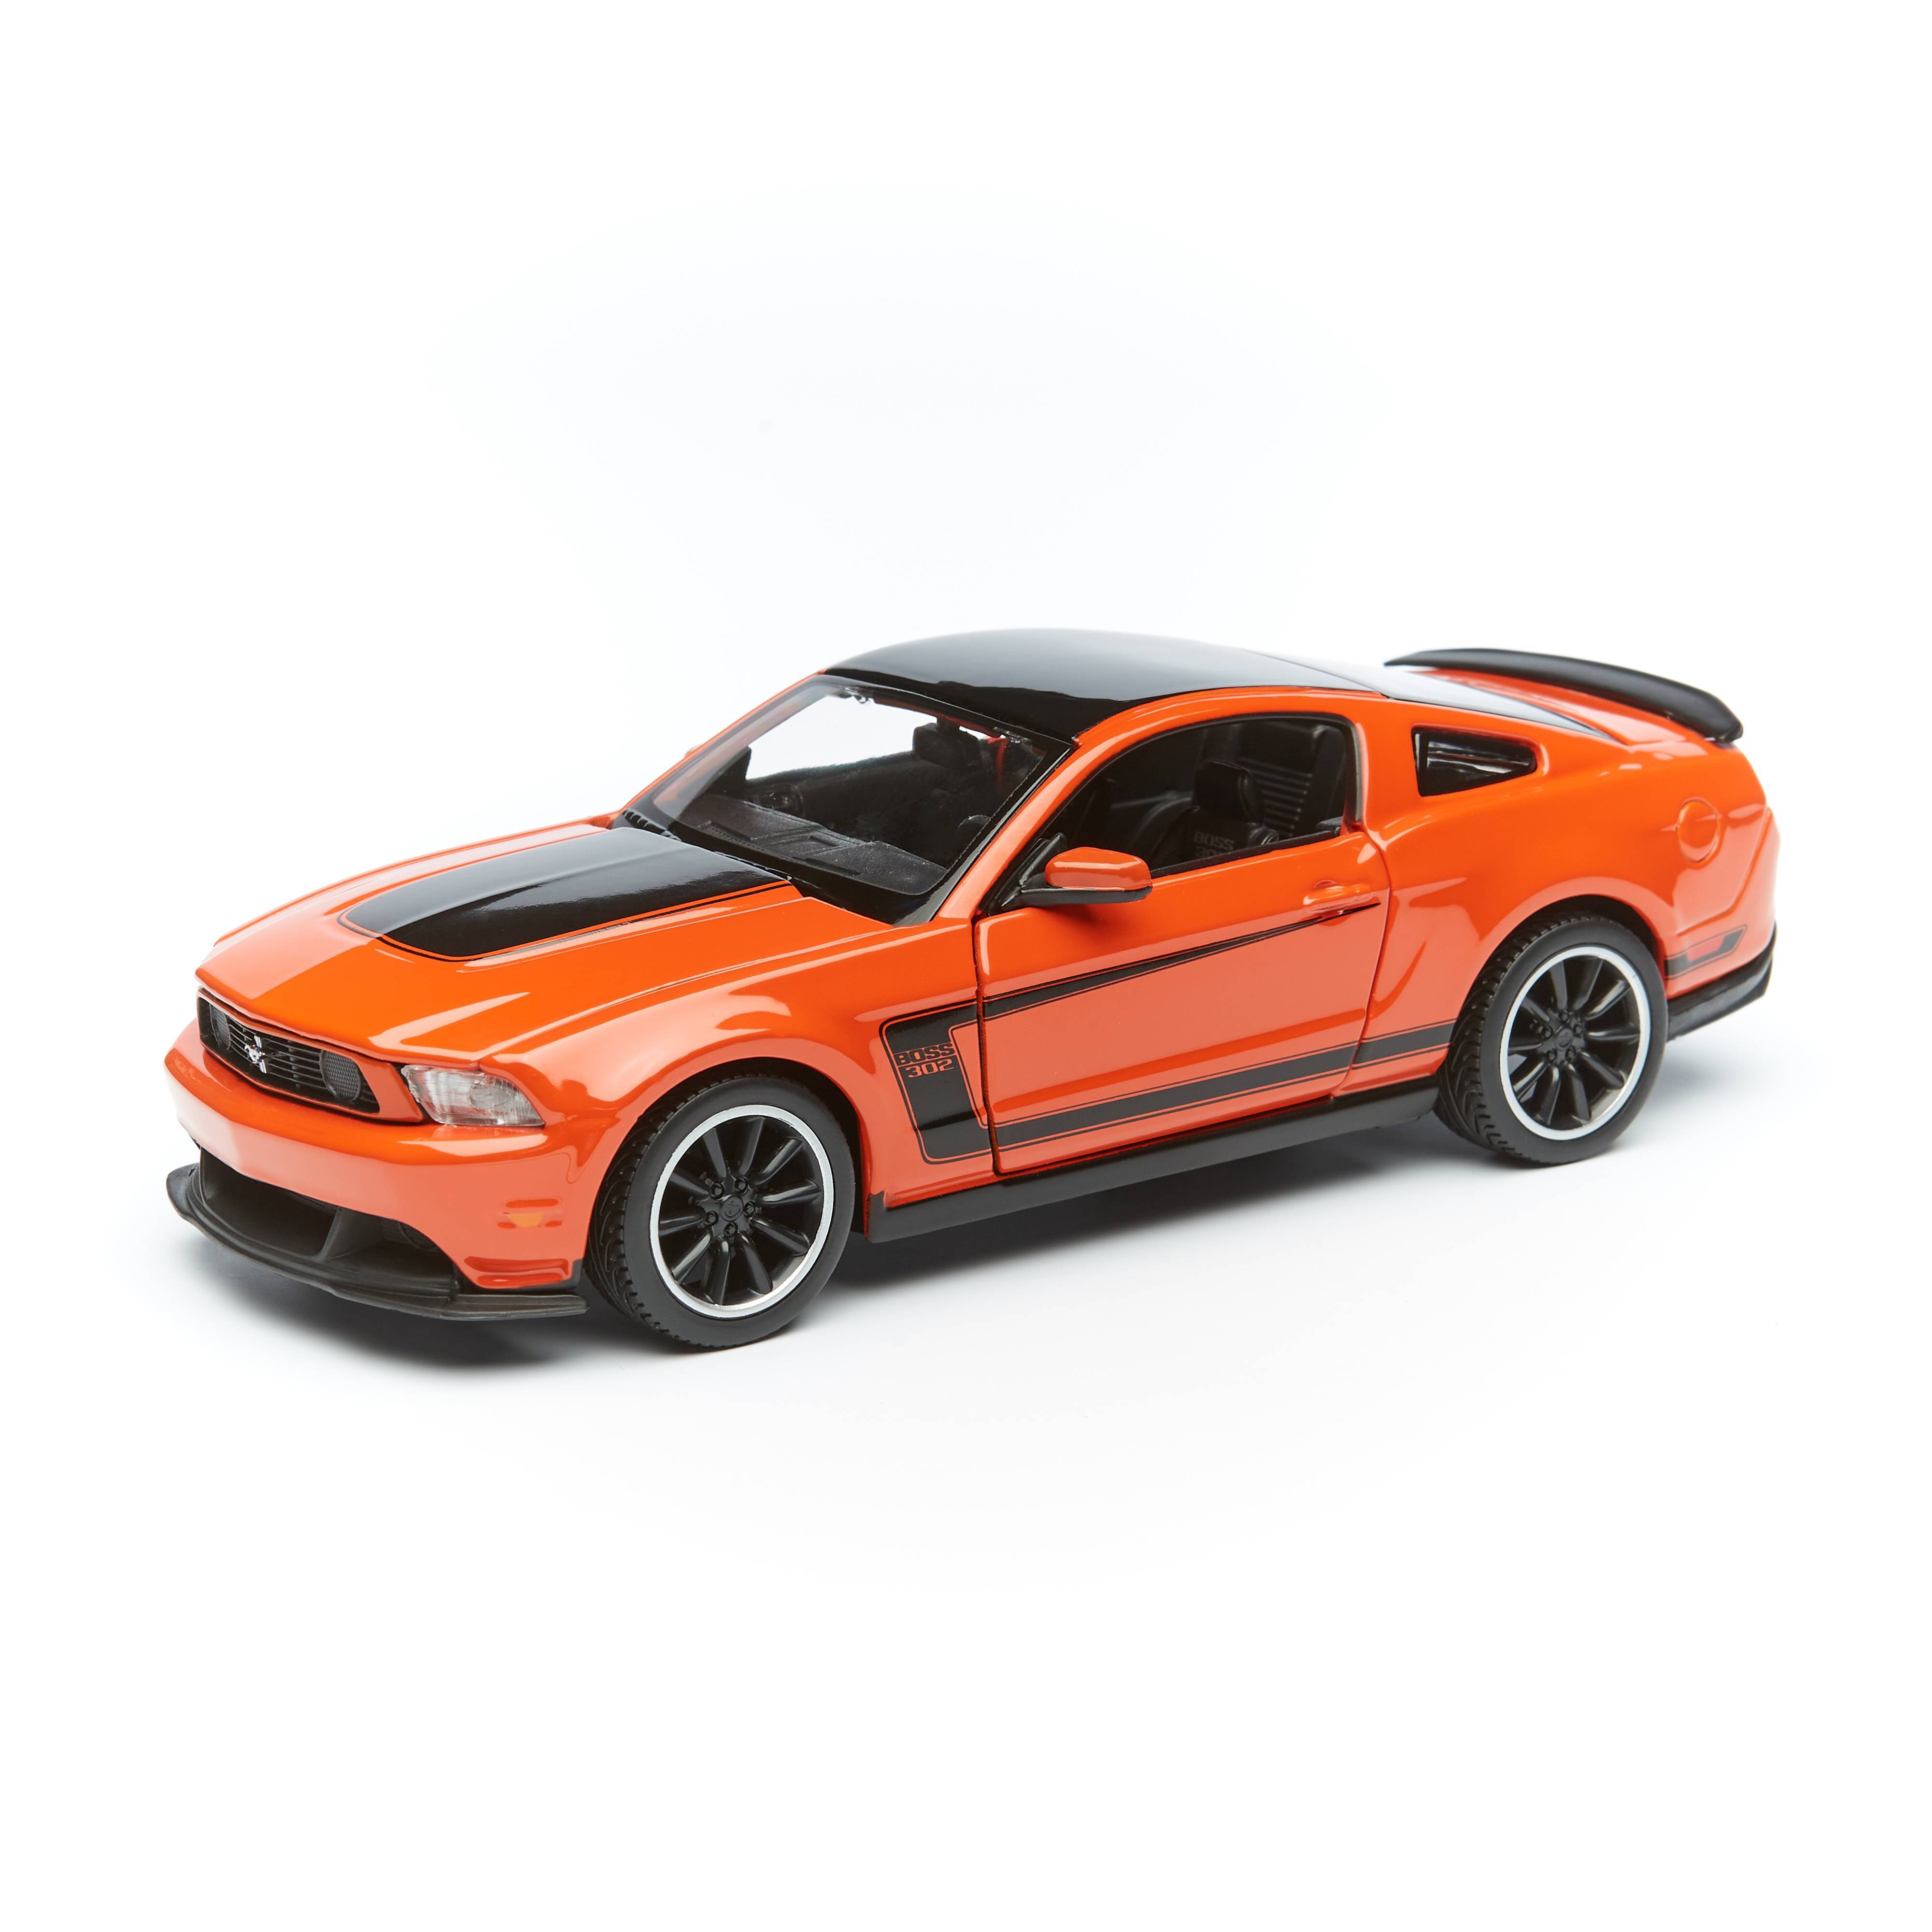 Игрушечная машинка Maisto Ford Mustang Boss 302 1:24, оранжевая 31519/31269/1